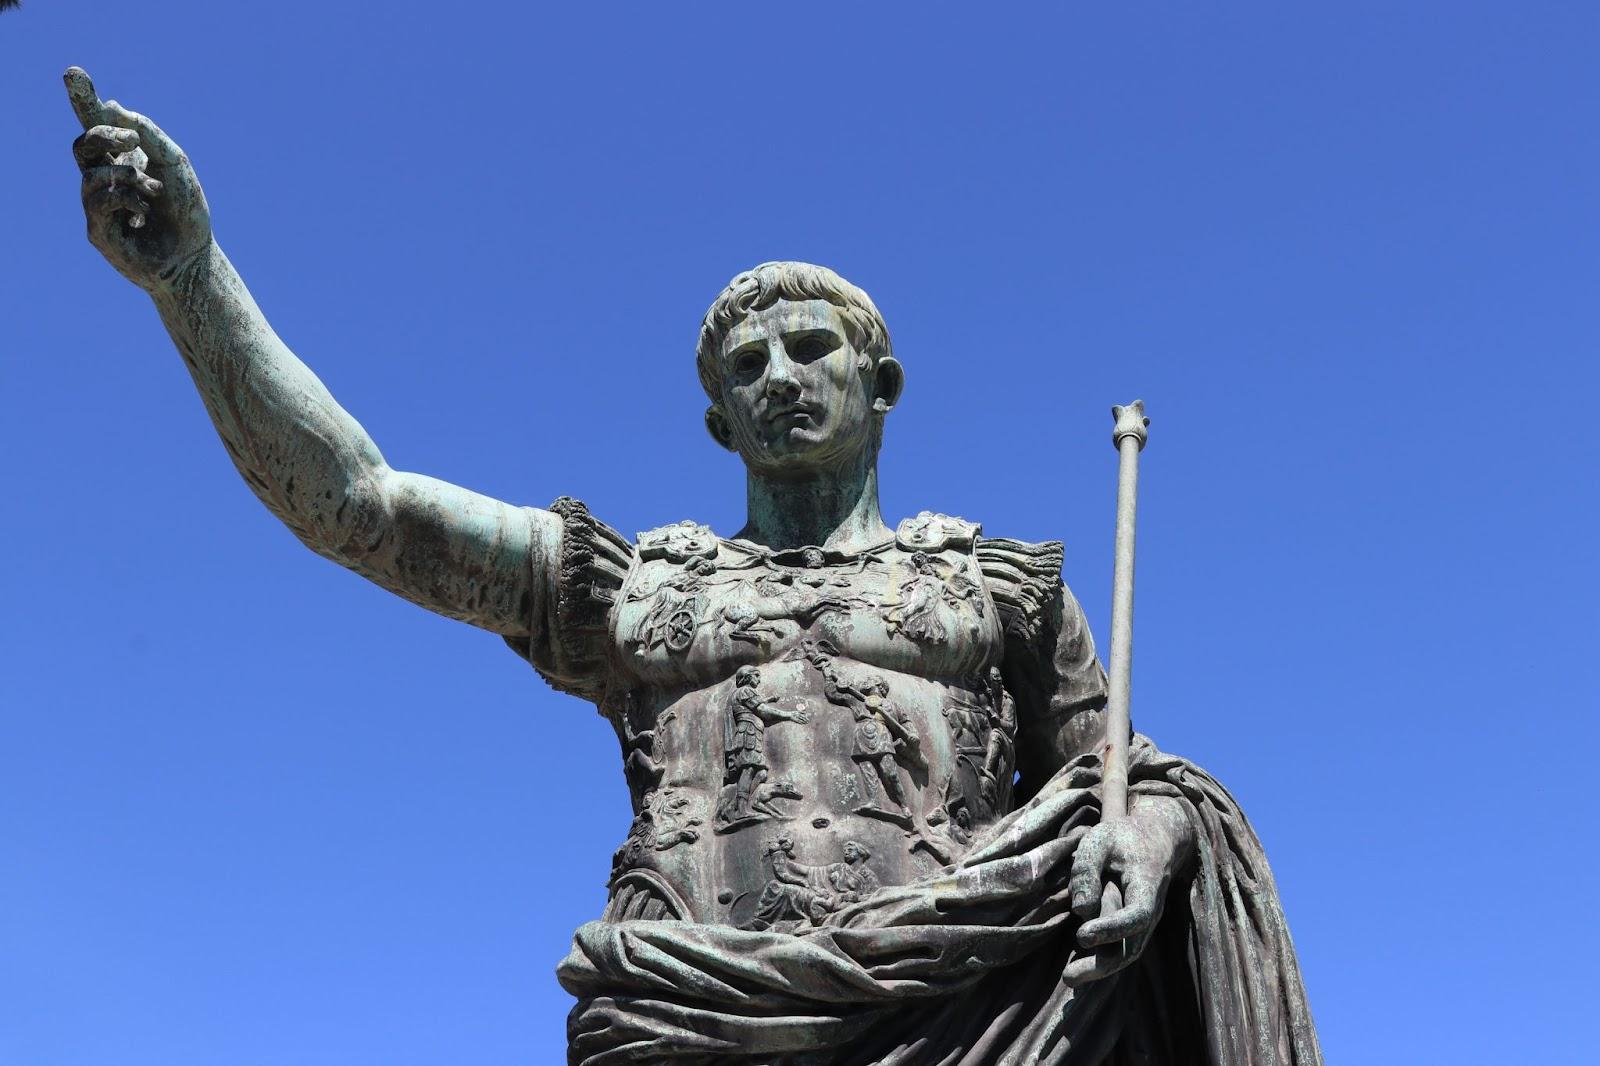 De vroege Romeinse keizers